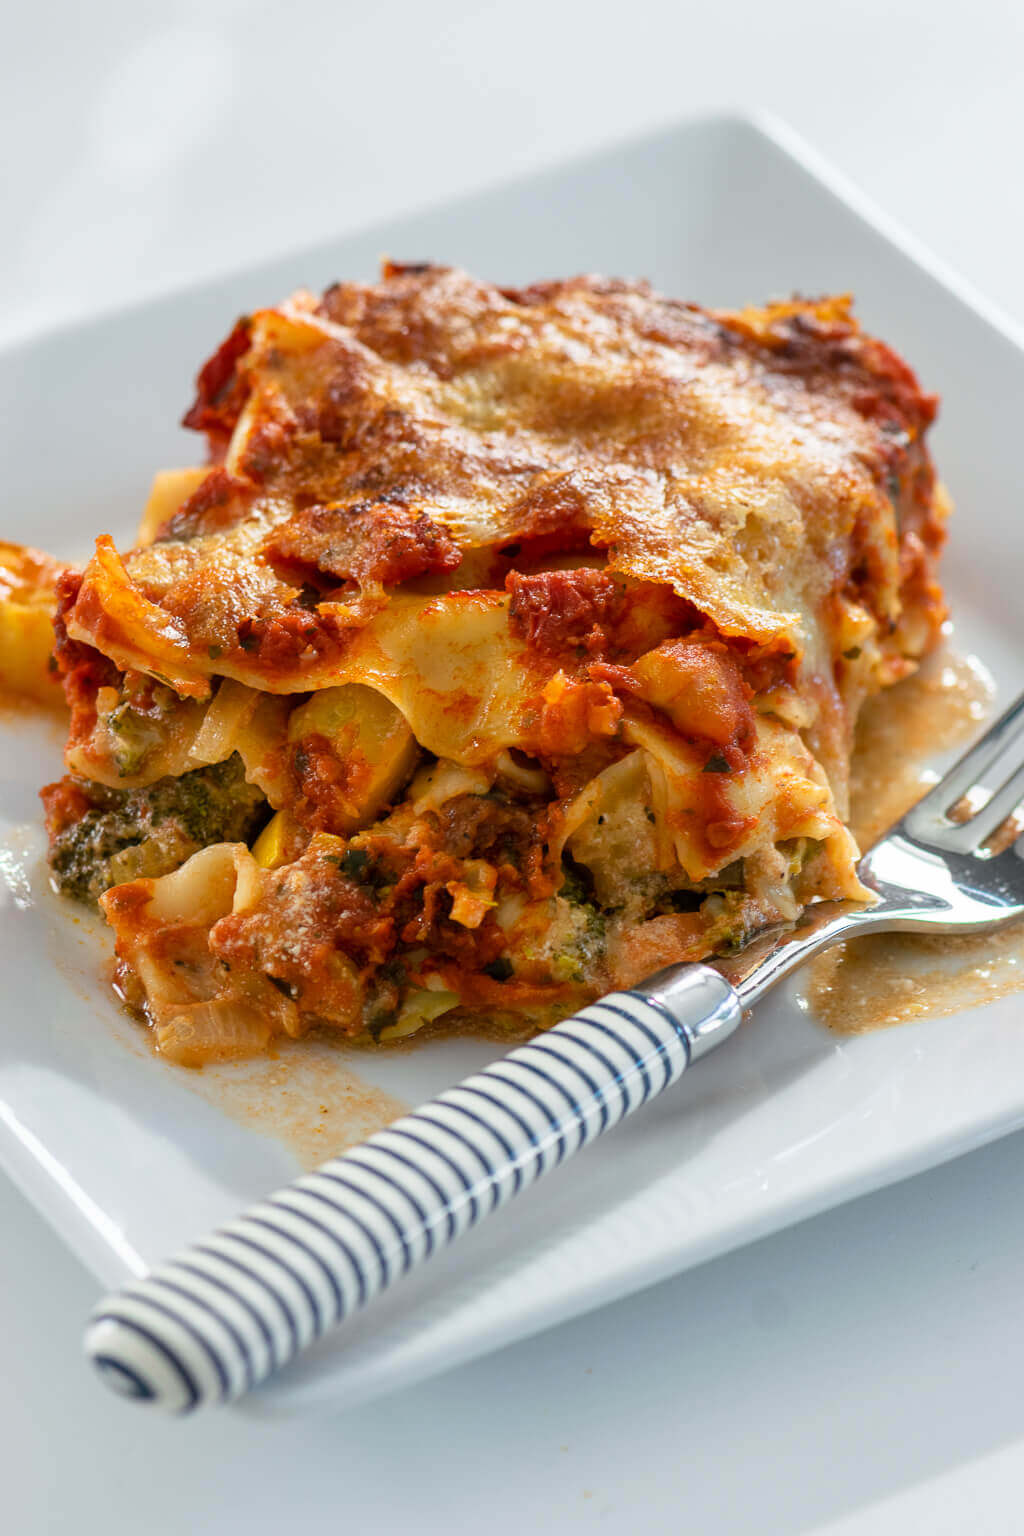 Gemüse Lasagne — Rezepte Suchen